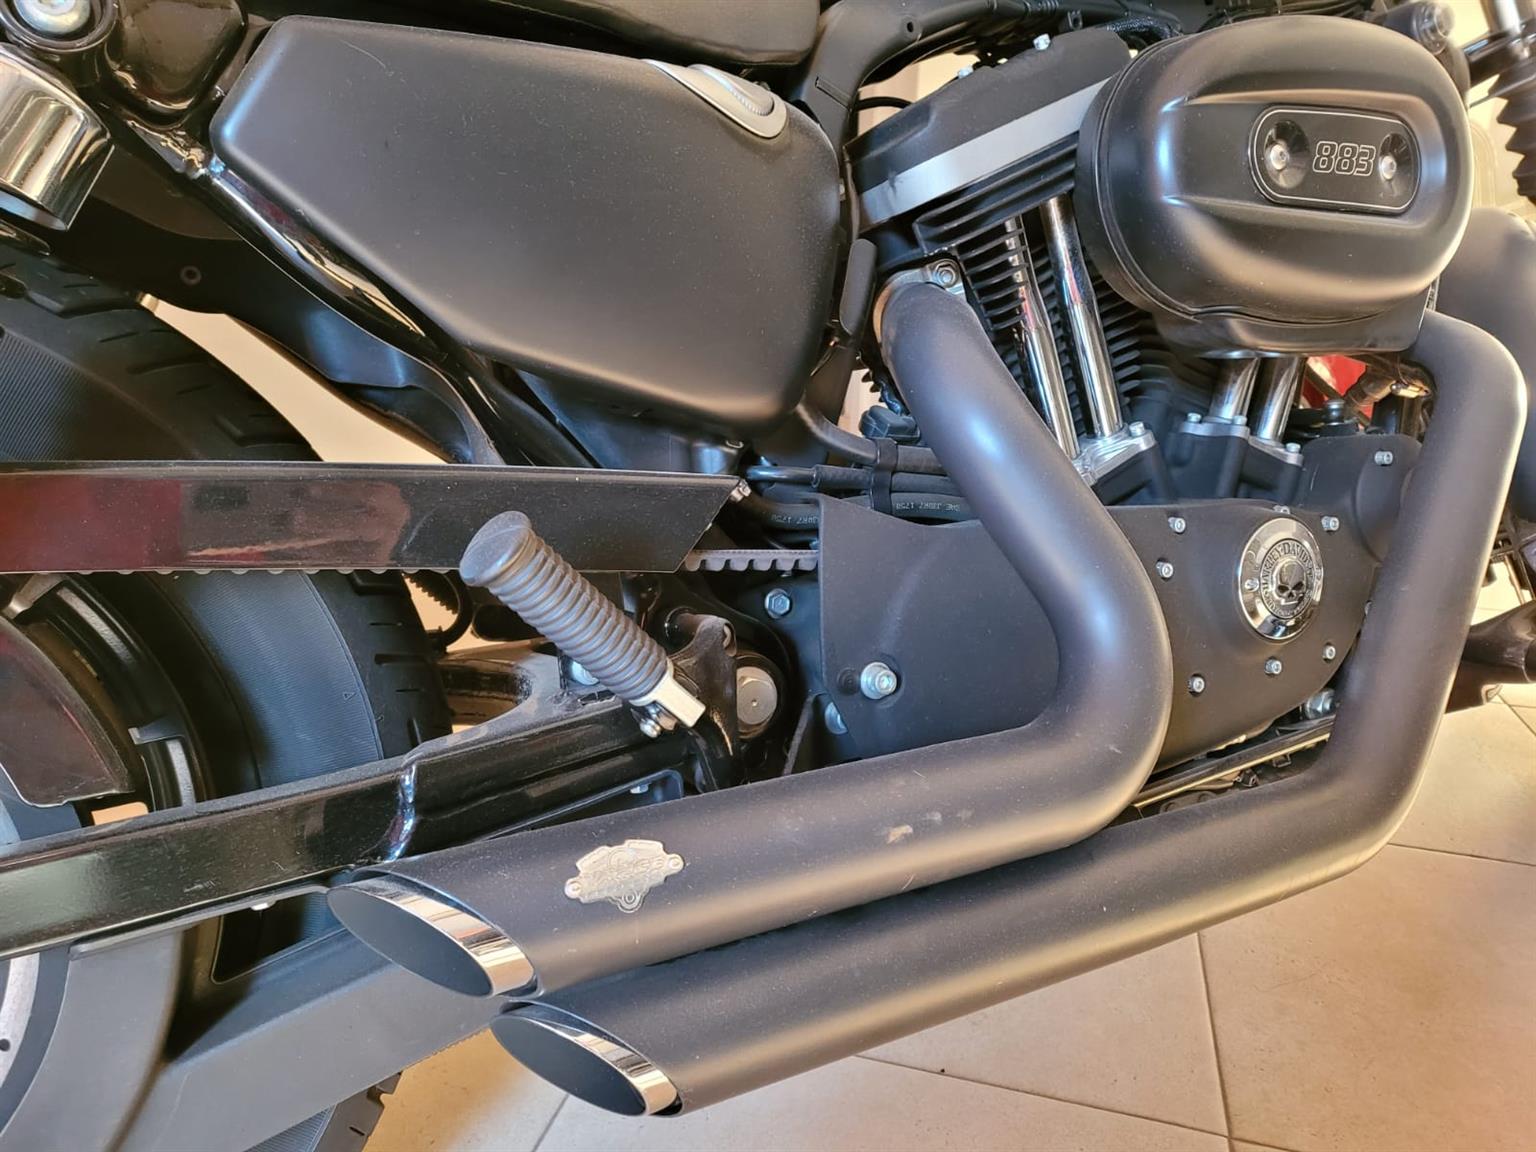 2011 Harley Davidson Sportster 883 Iron